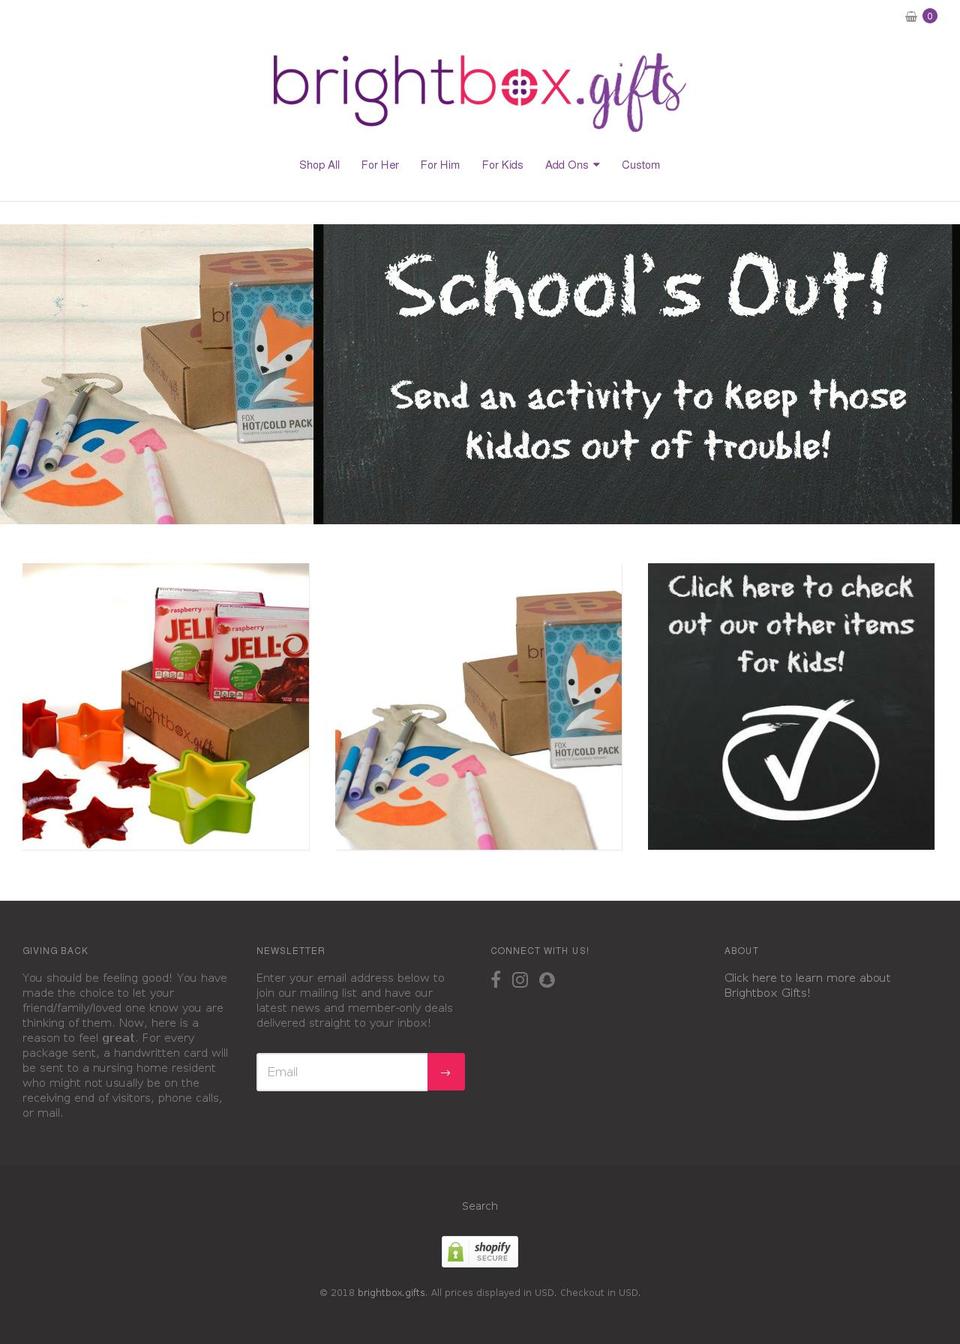 brightbox.gifts shopify website screenshot